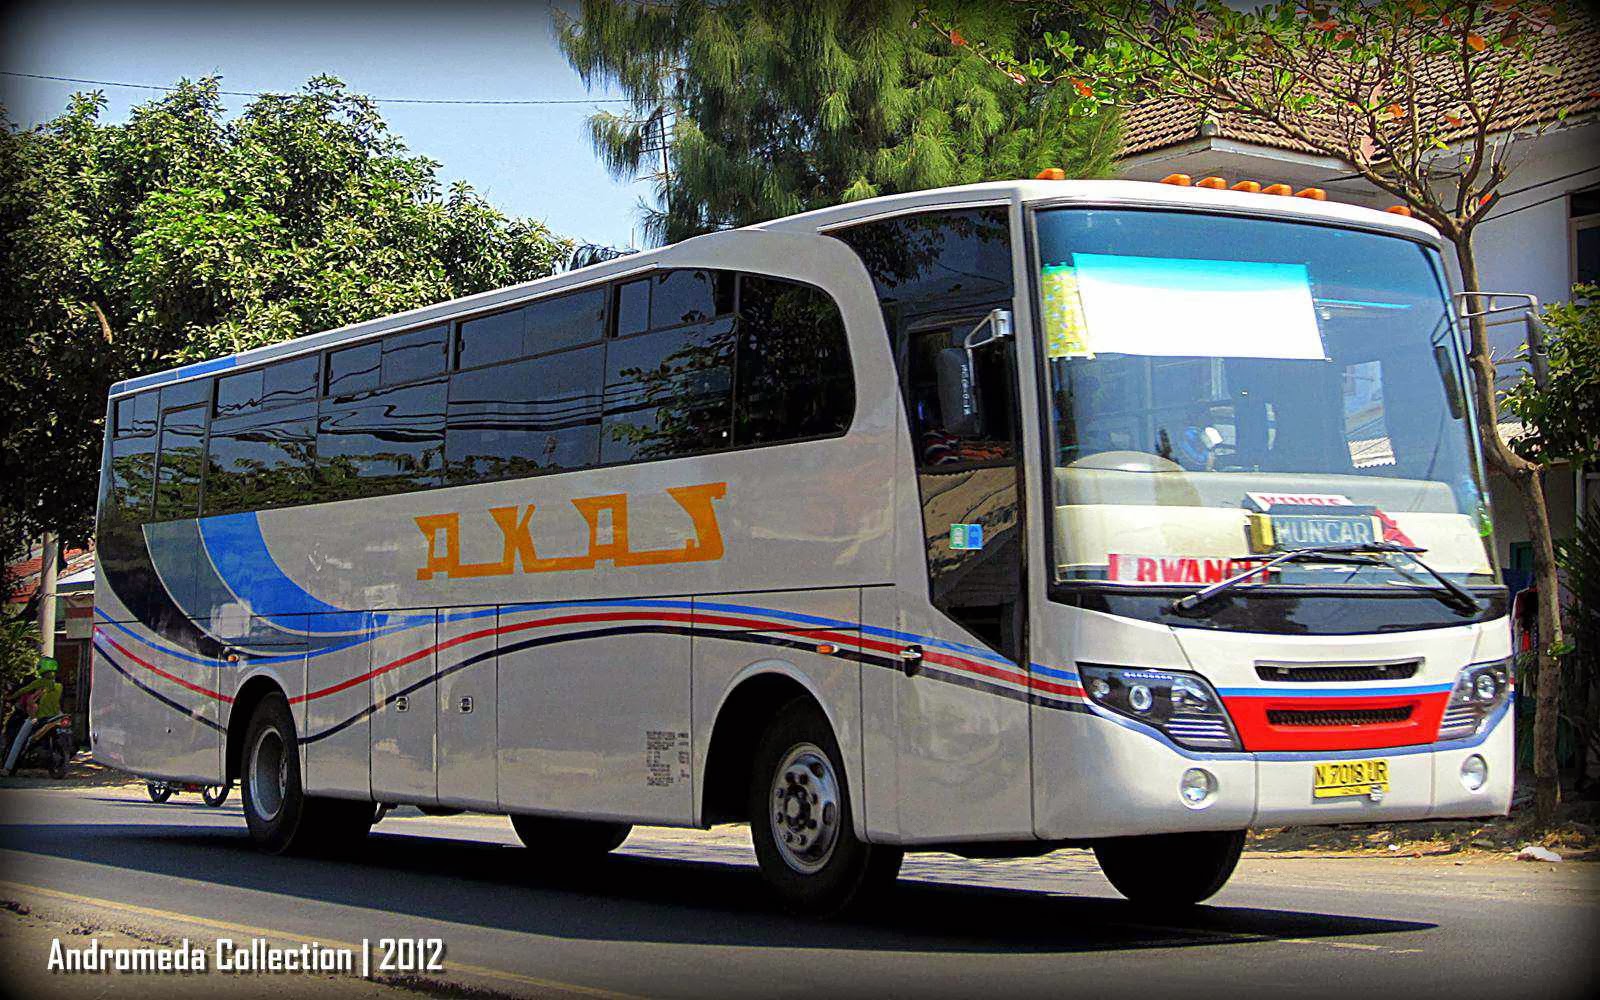 Bus Bus Yang Pernah Dan Masih Menguasai Aspal Jawa Timur Scenes